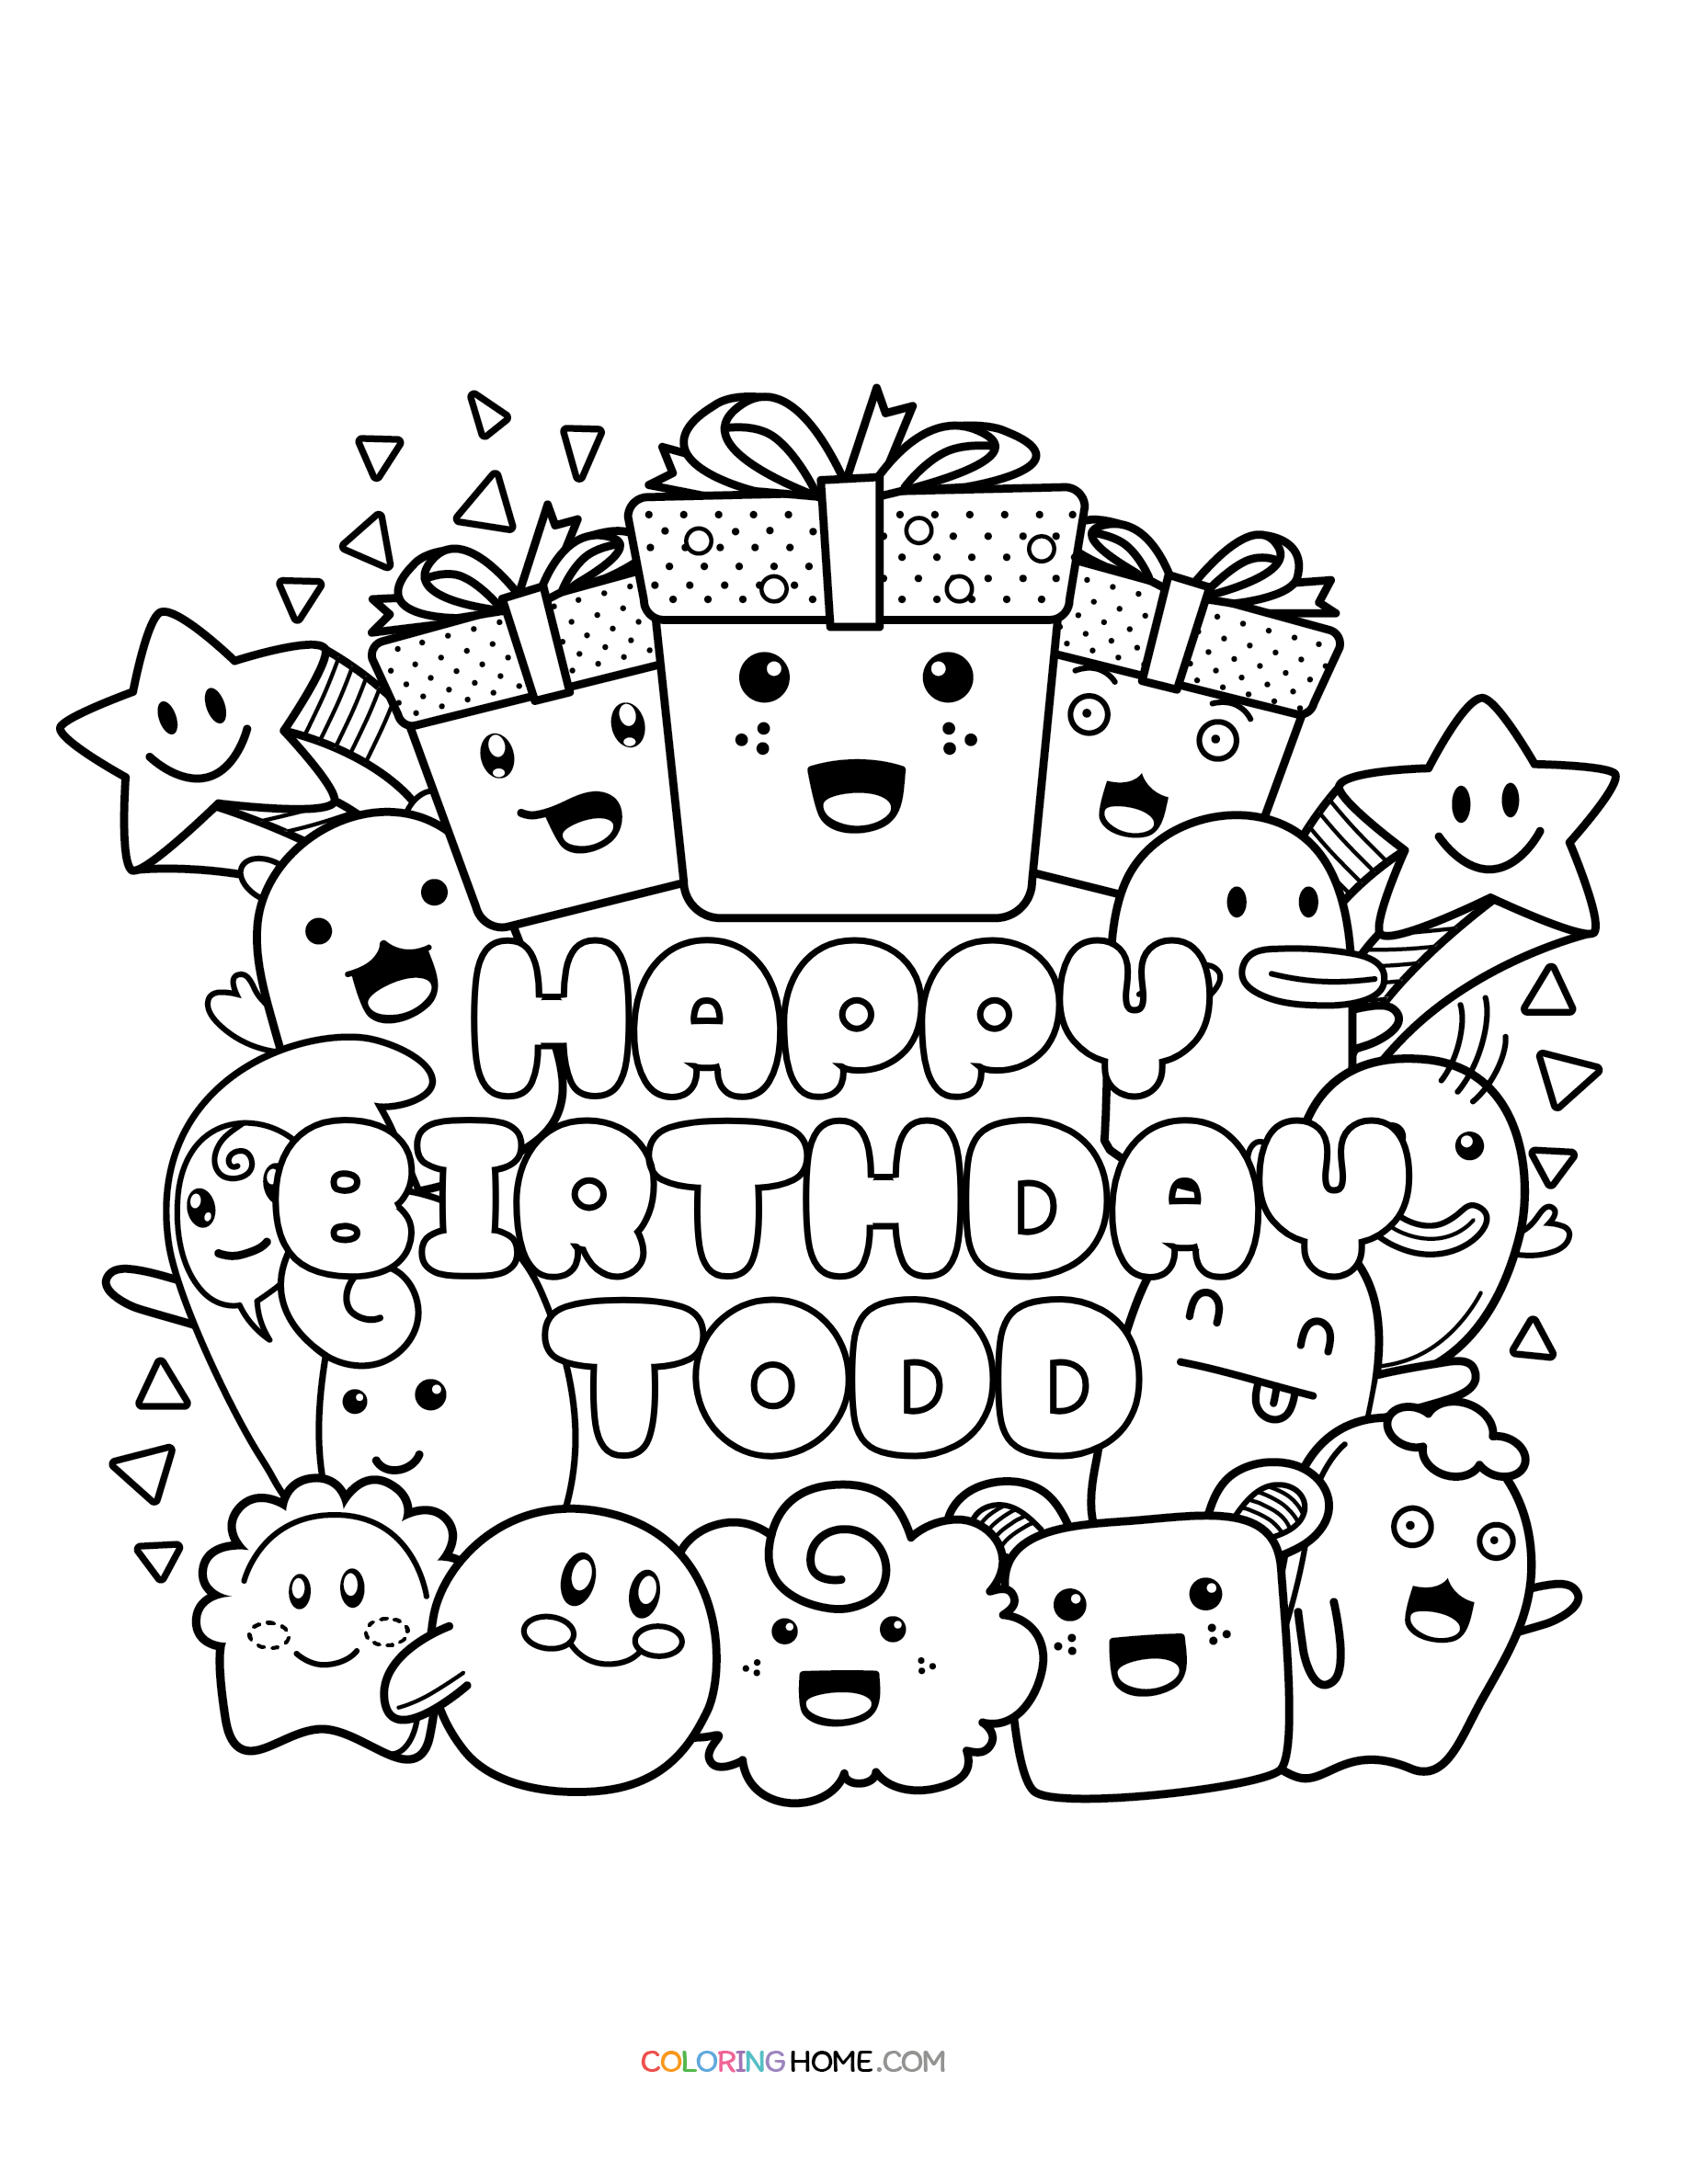 Happy Birthday Todd coloring page